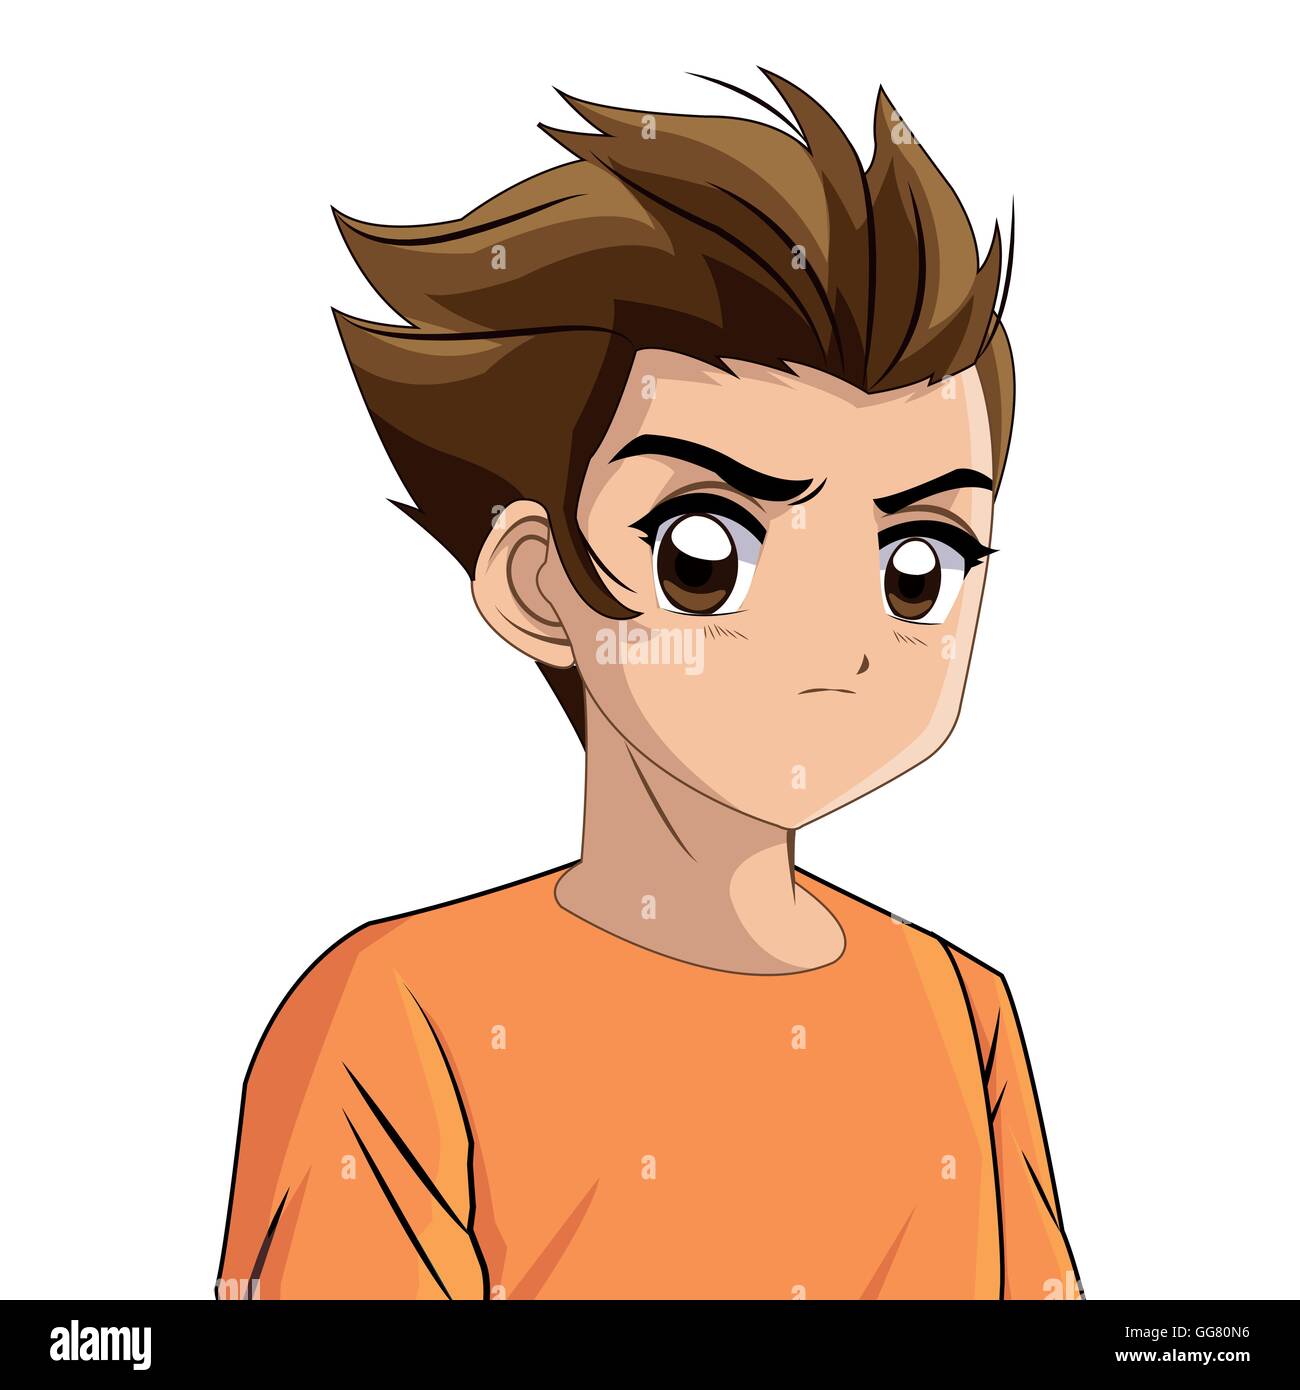 Anime boy or man cartoon icon